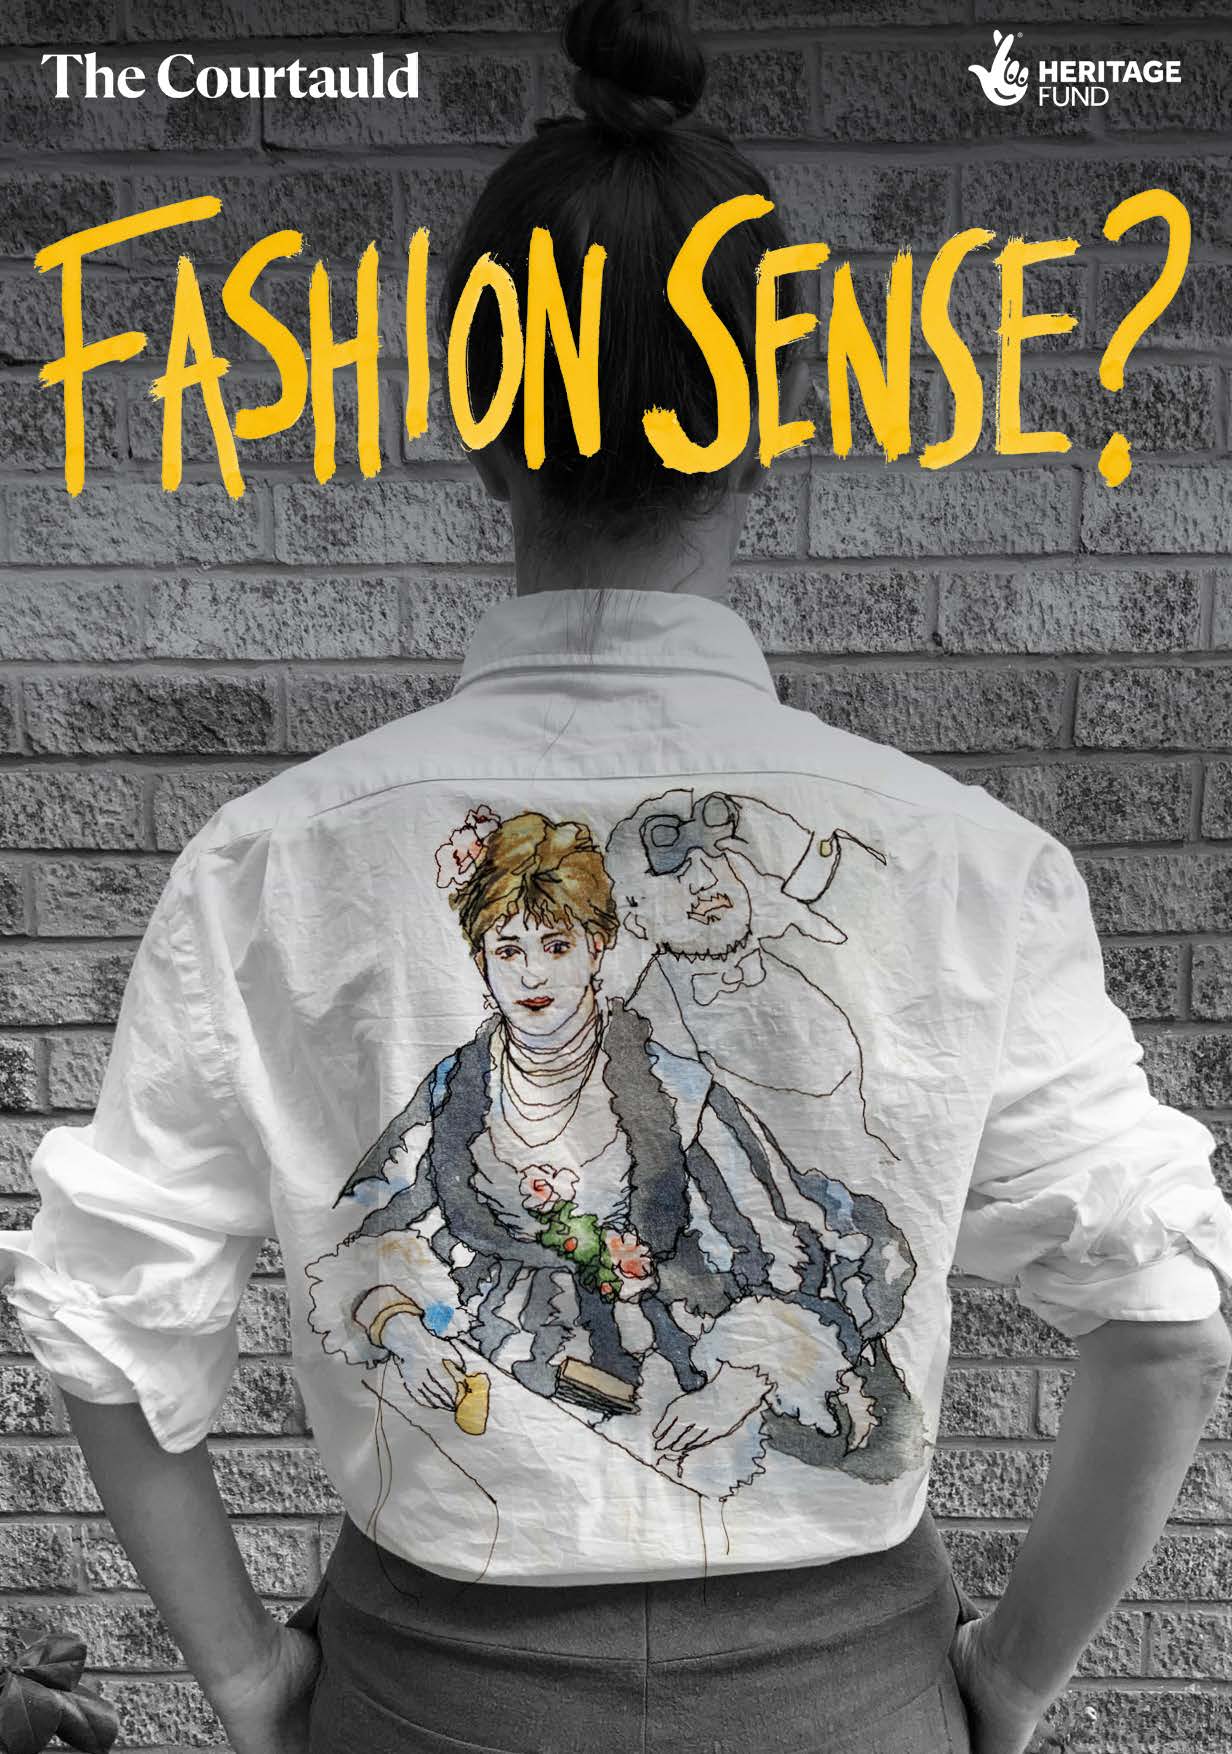 Cover Image of Fashion sense school resource